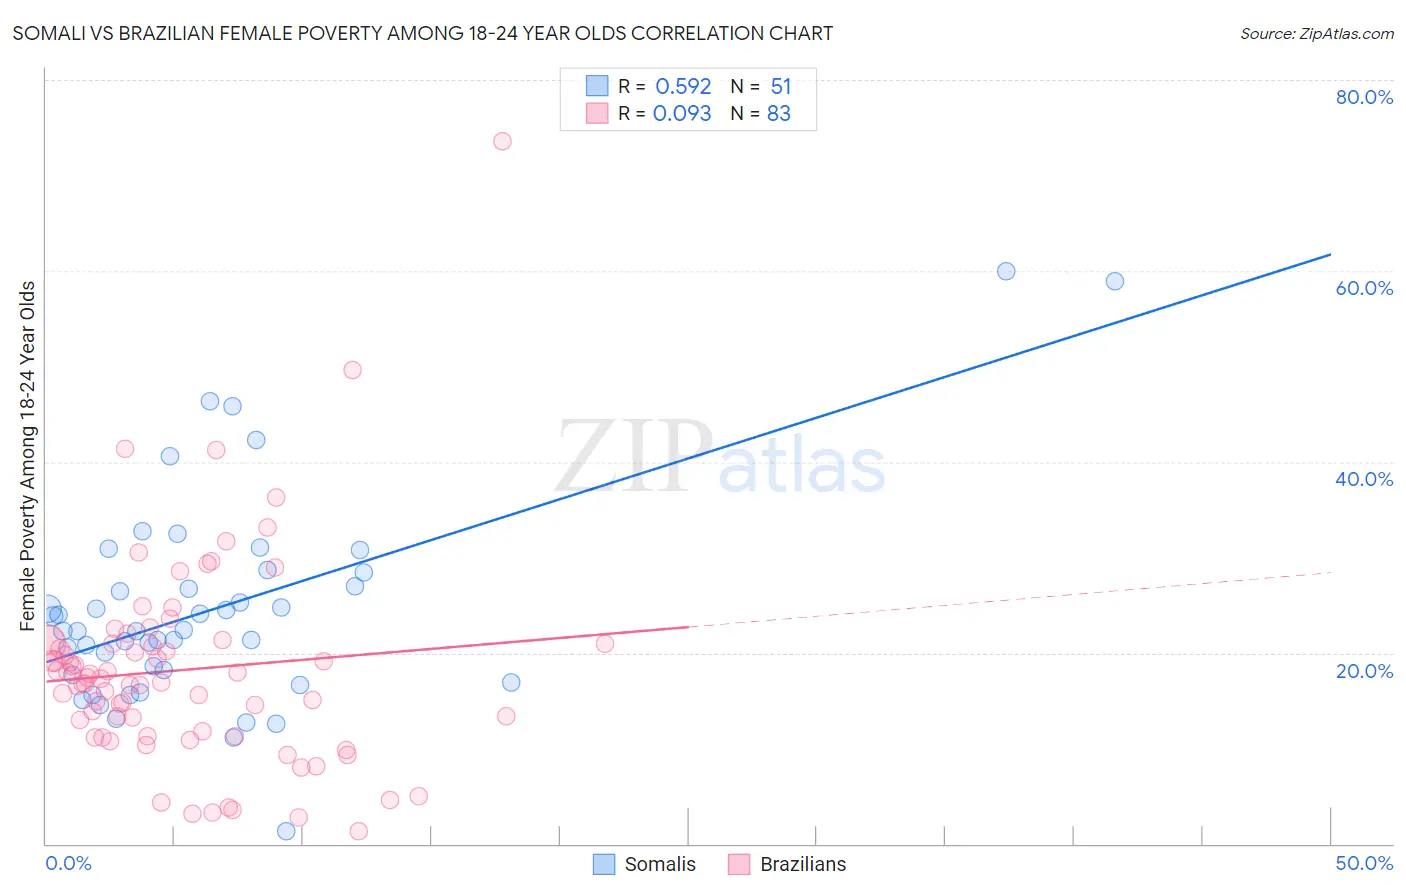 Somali vs Brazilian Female Poverty Among 18-24 Year Olds